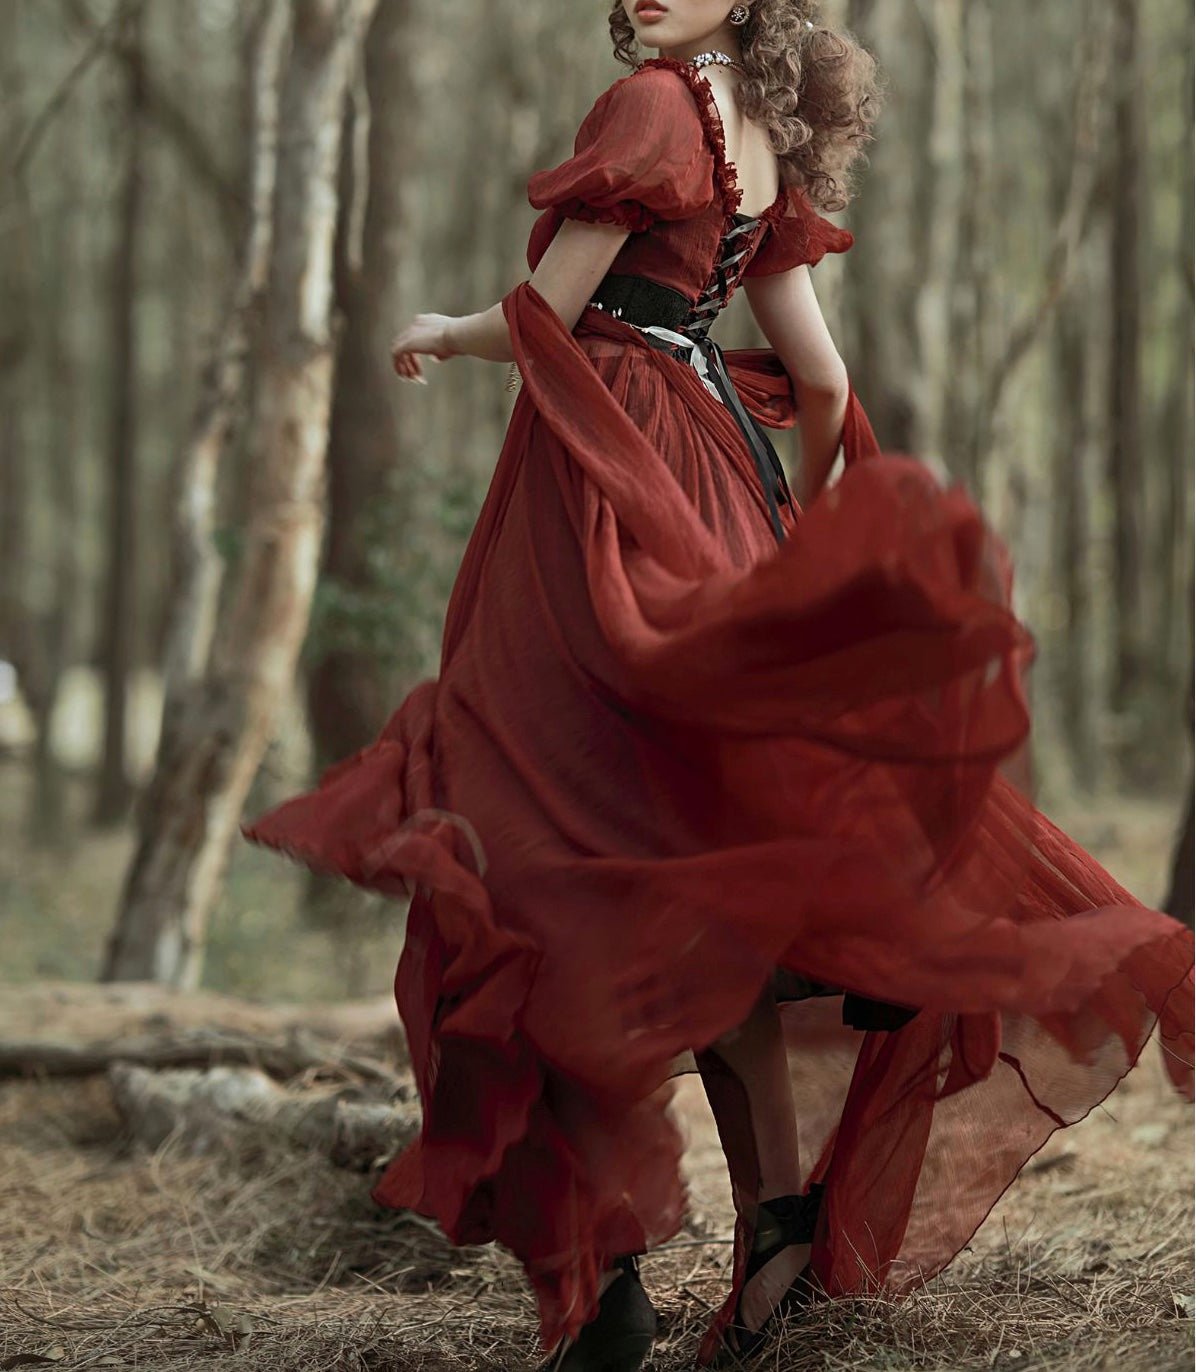 Burgundy Red Bridgerton Dress - Greek Goddess - Regency Ball Gown Empire Waist - Plus Size - WonderlandByLilian